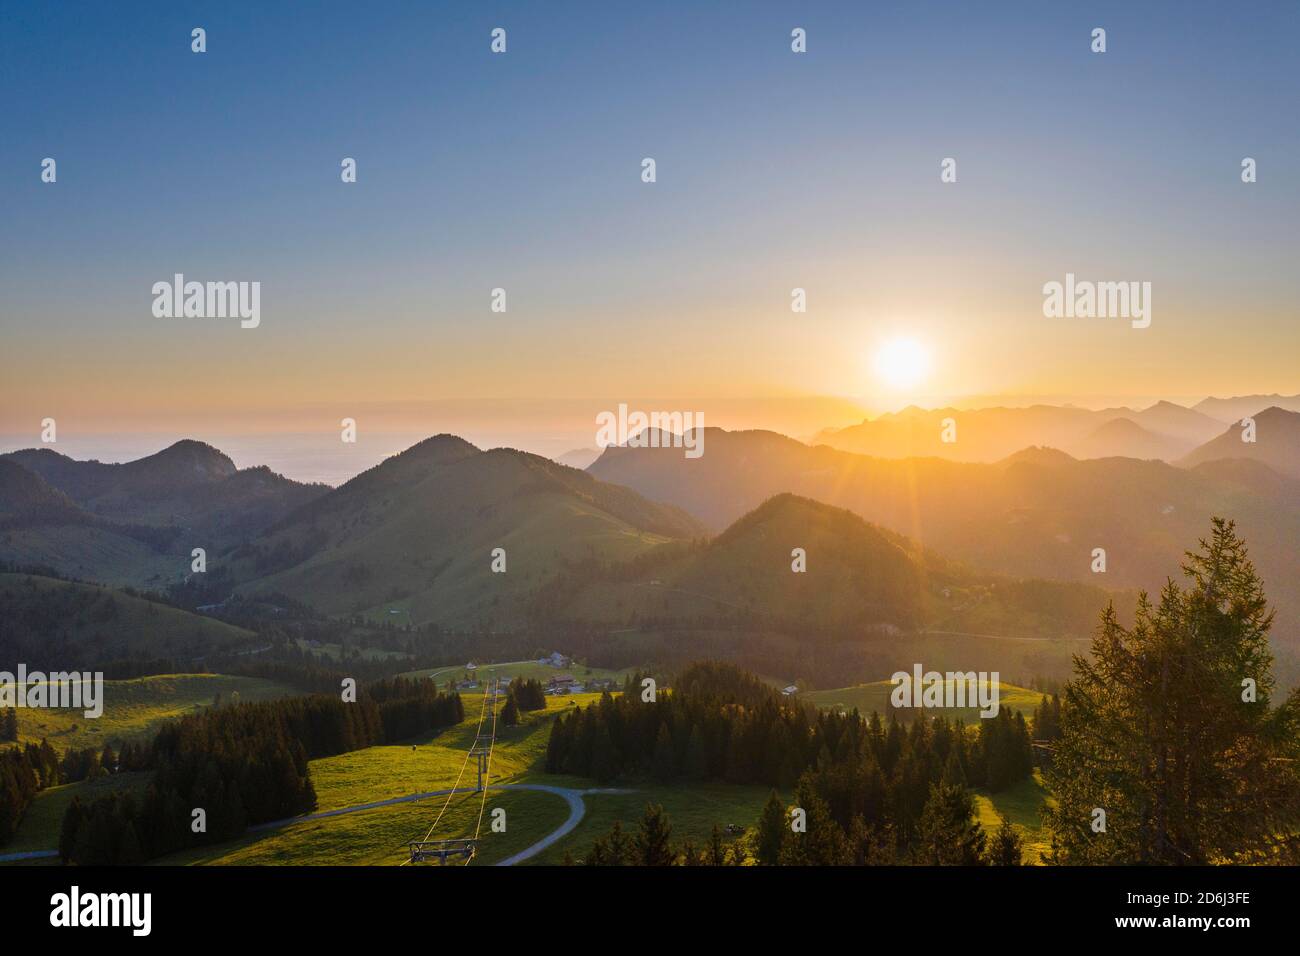 Sunrise at Sudelfeld, near Bayrischzell, Mangfall mountains, drone picture, Upper Bavaria, Bavaria, Germany Stock Photo